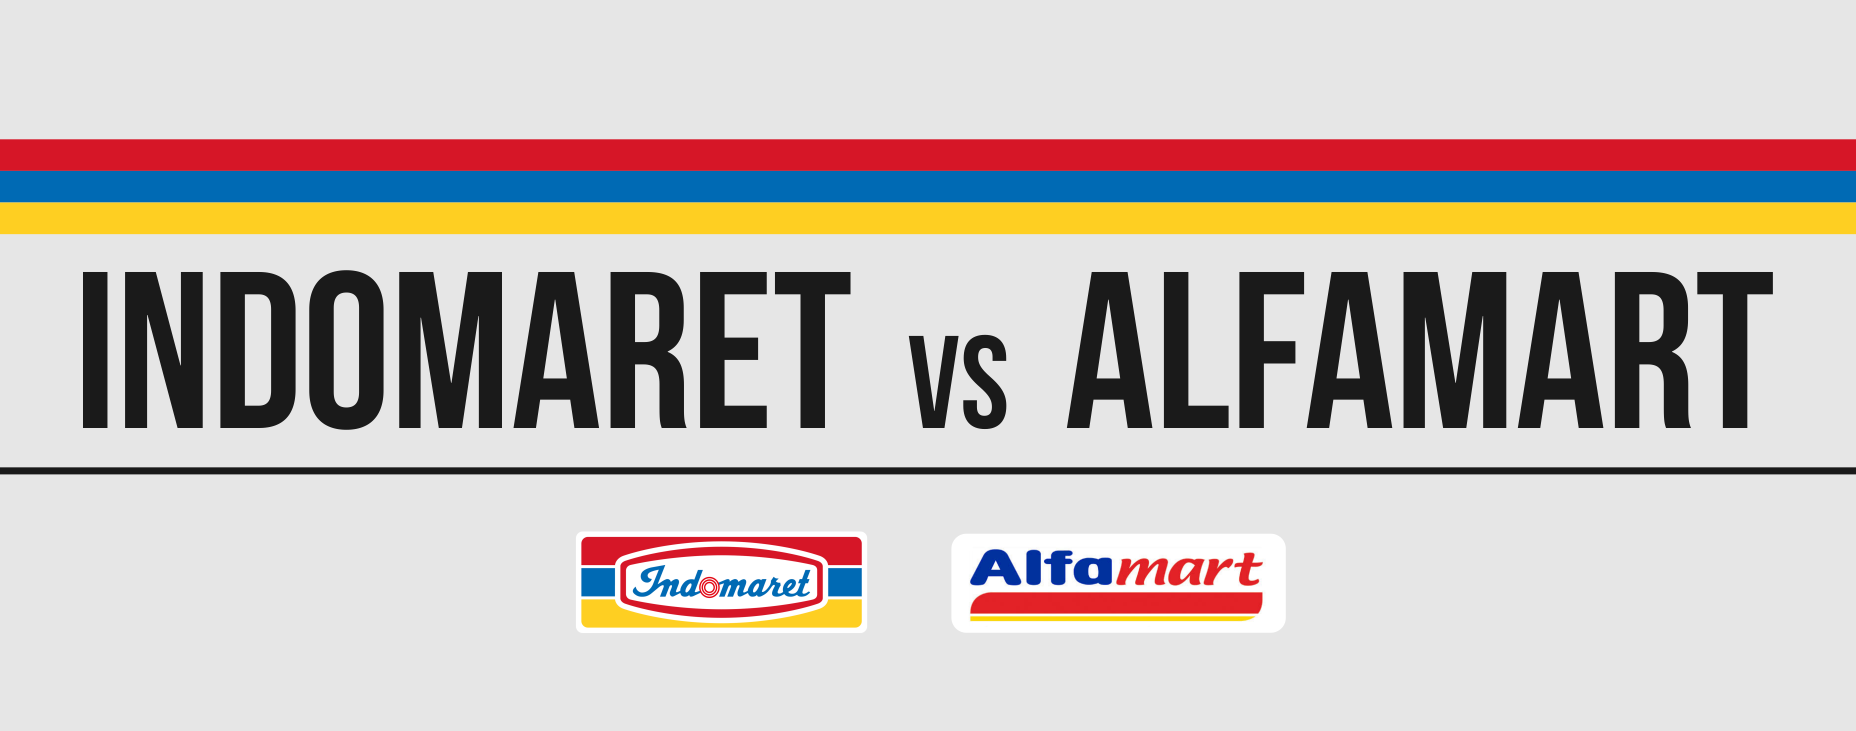 Indomaret vs Alfamart Survey Report - JAKPAT